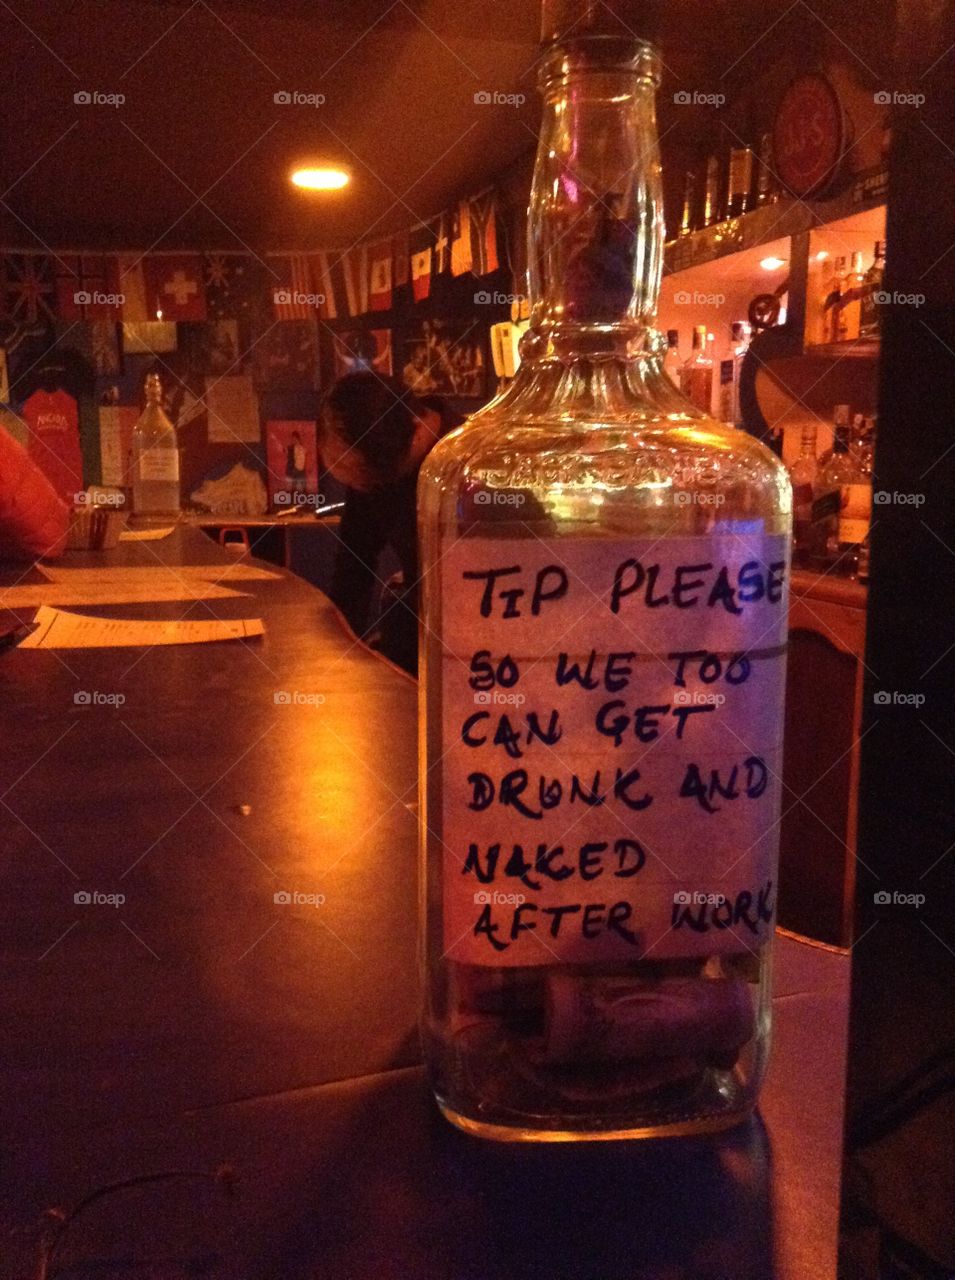 Tip jar at bar in Nepal